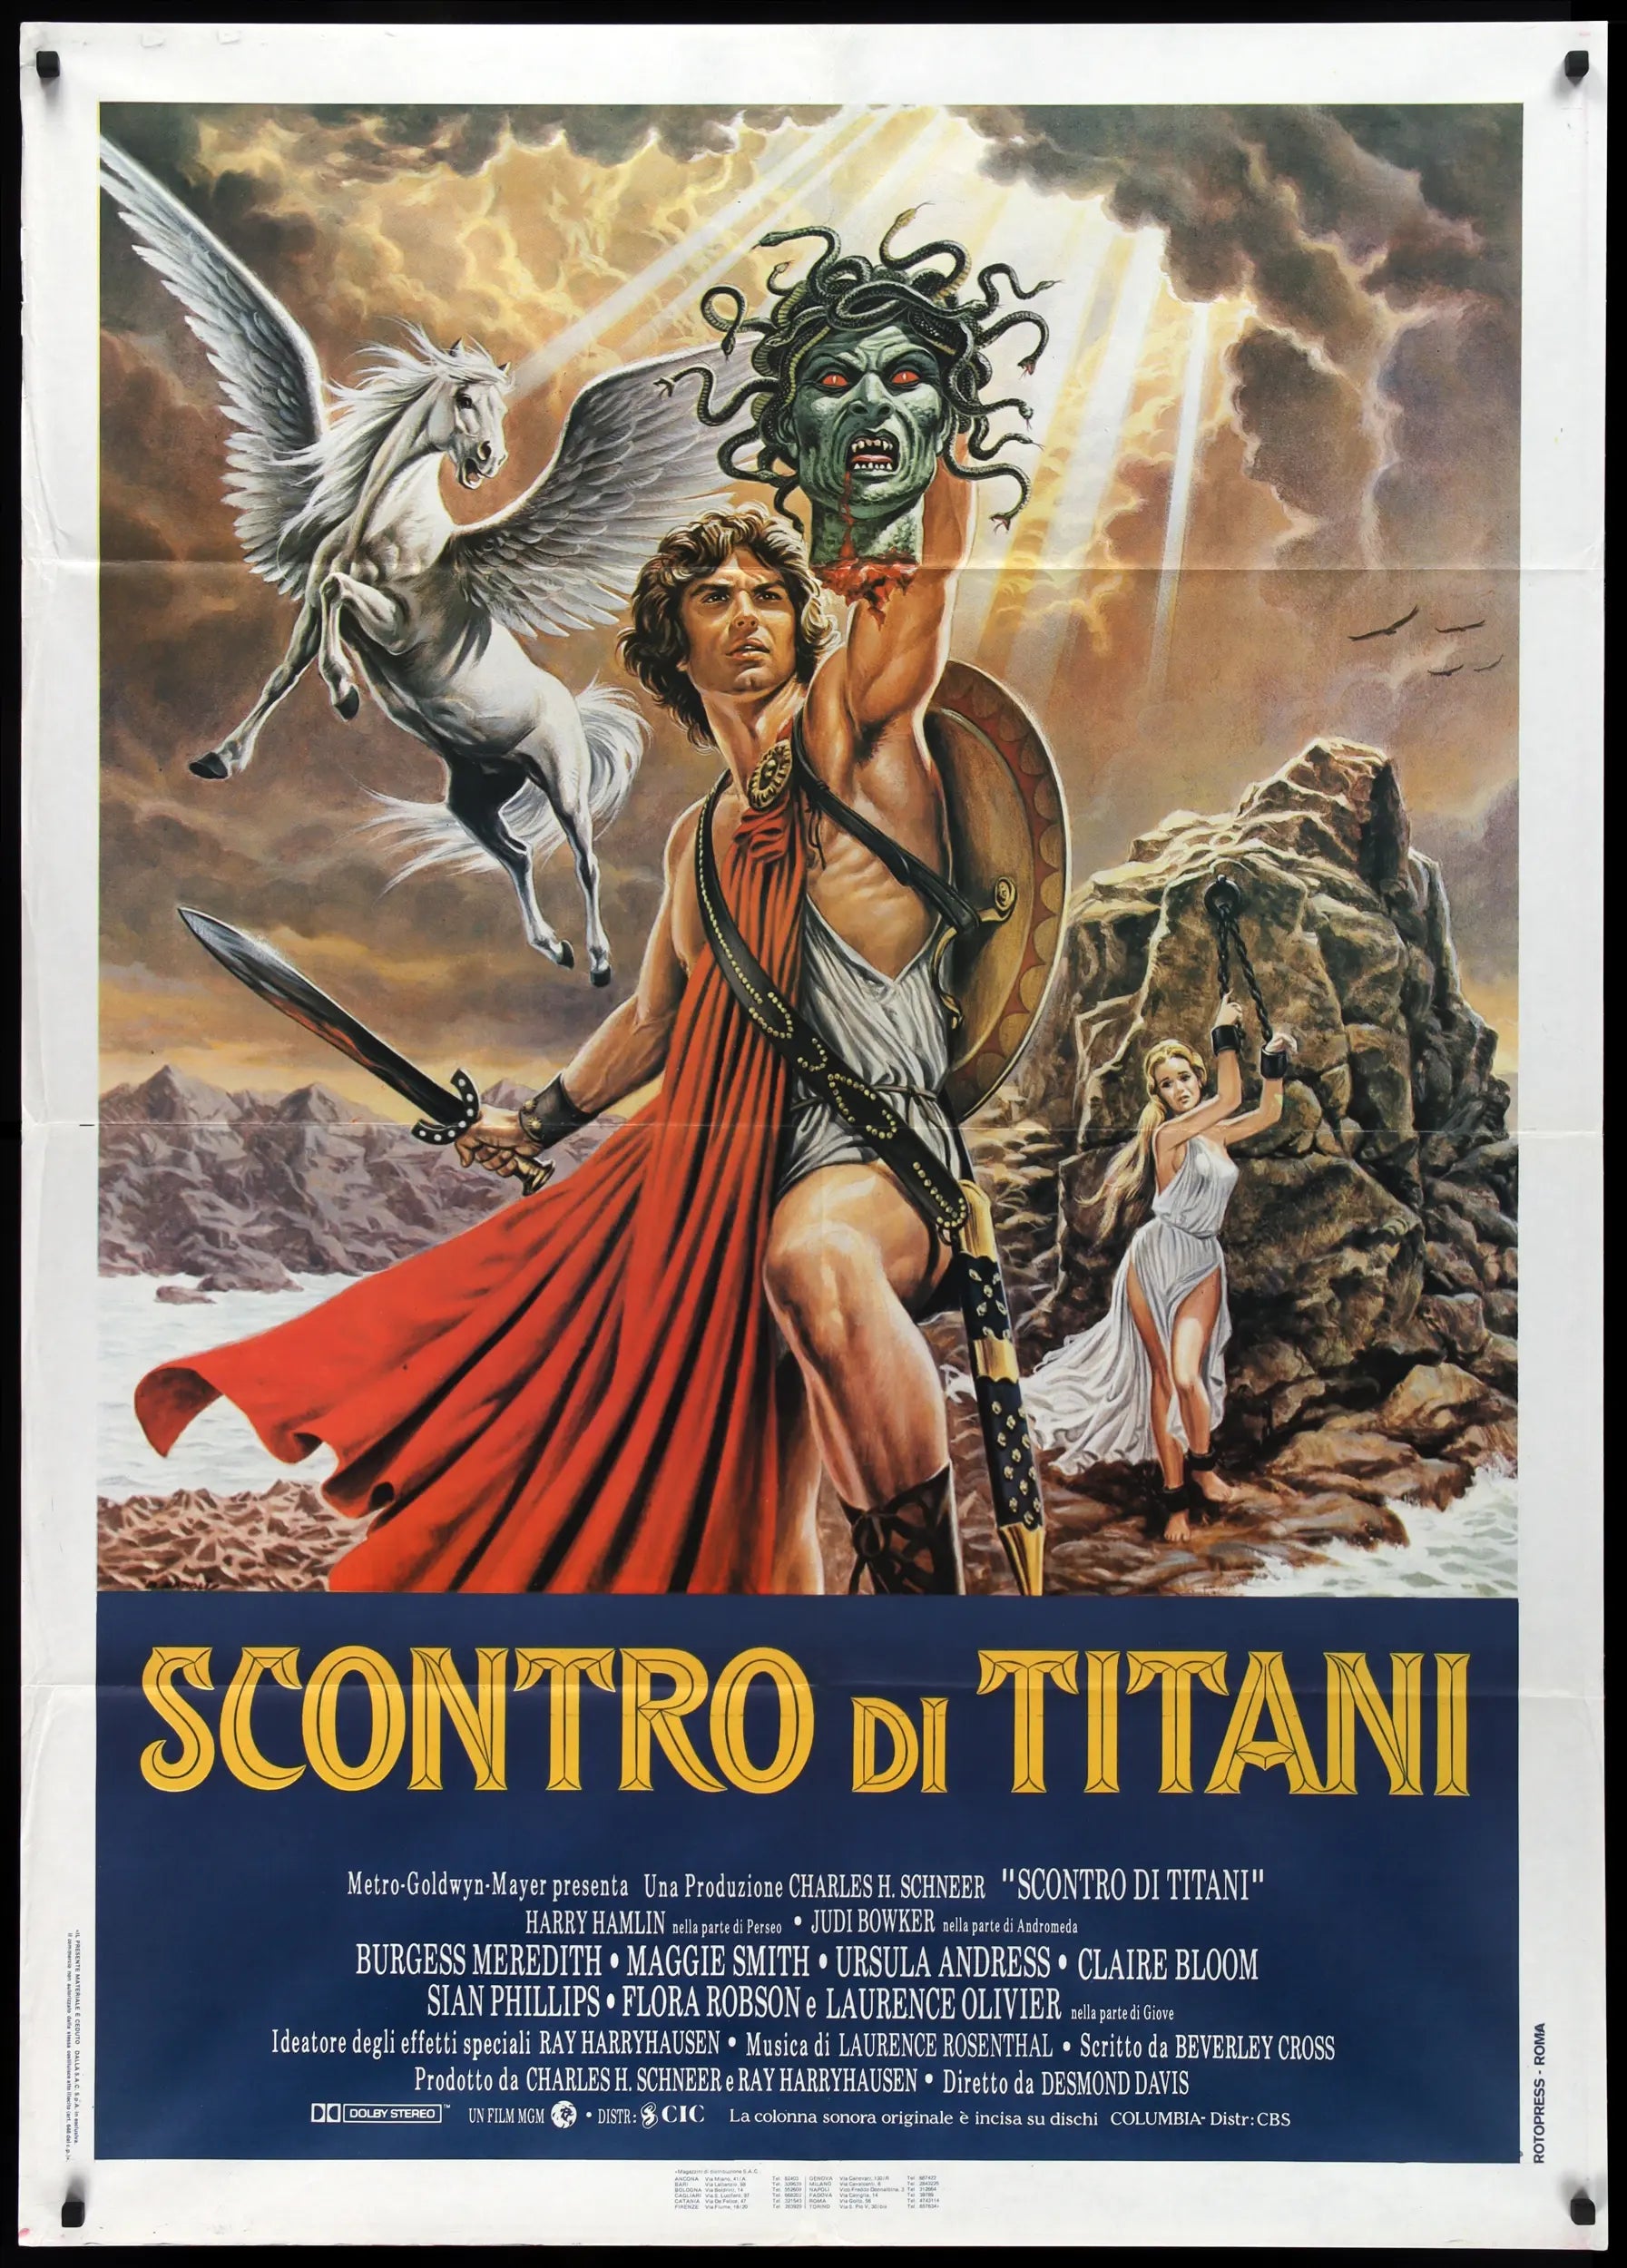 Original Clash Of The Titans (1981) movie poster in C8 condition for $300.00